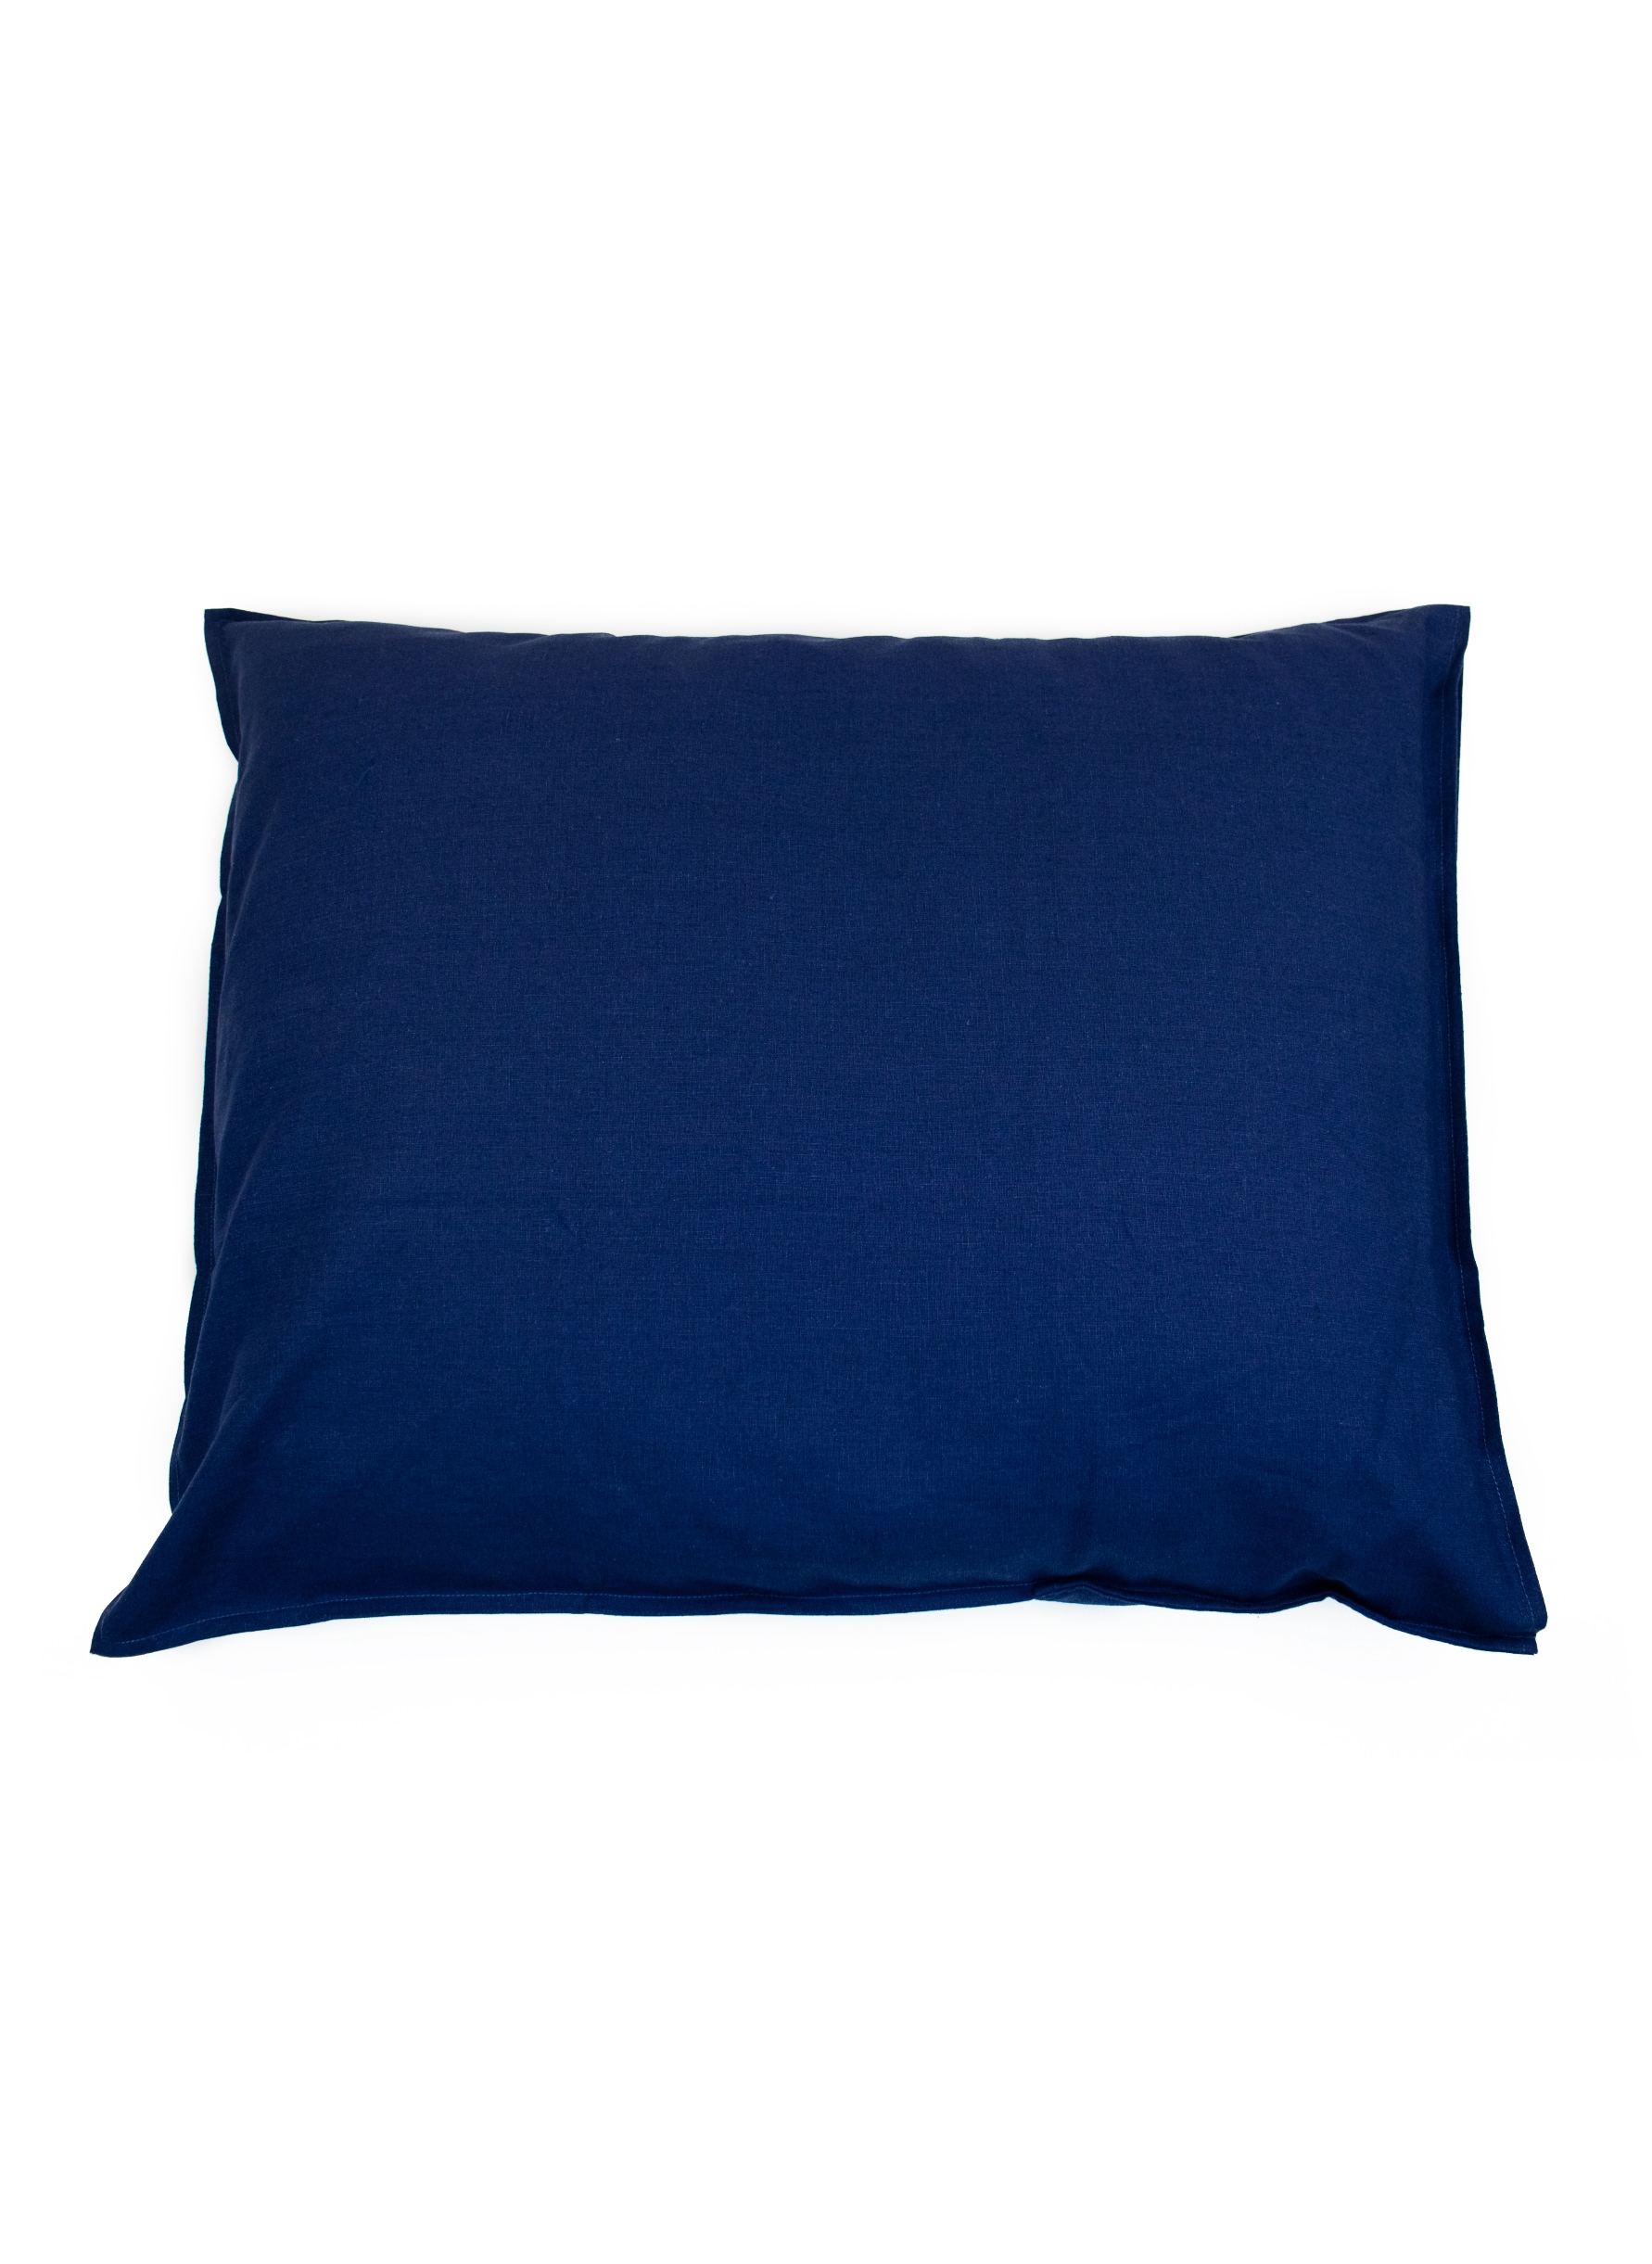 Pillowcase navy blue hemp/cotton